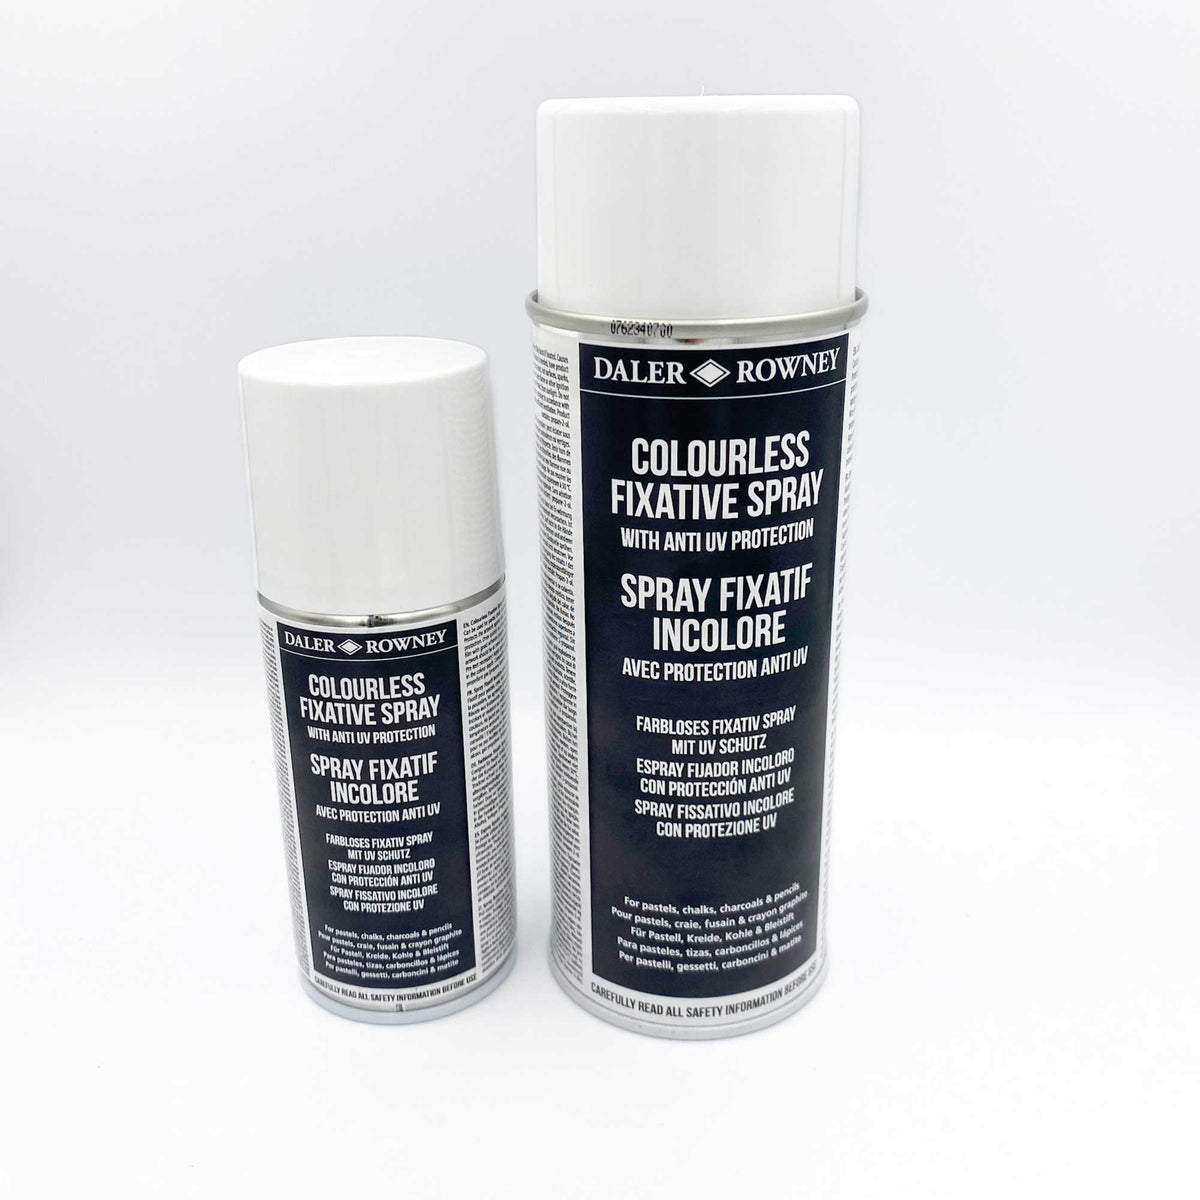 Daler-Rowney Colourless Perfix Fixative Spray With Anti UV Protection